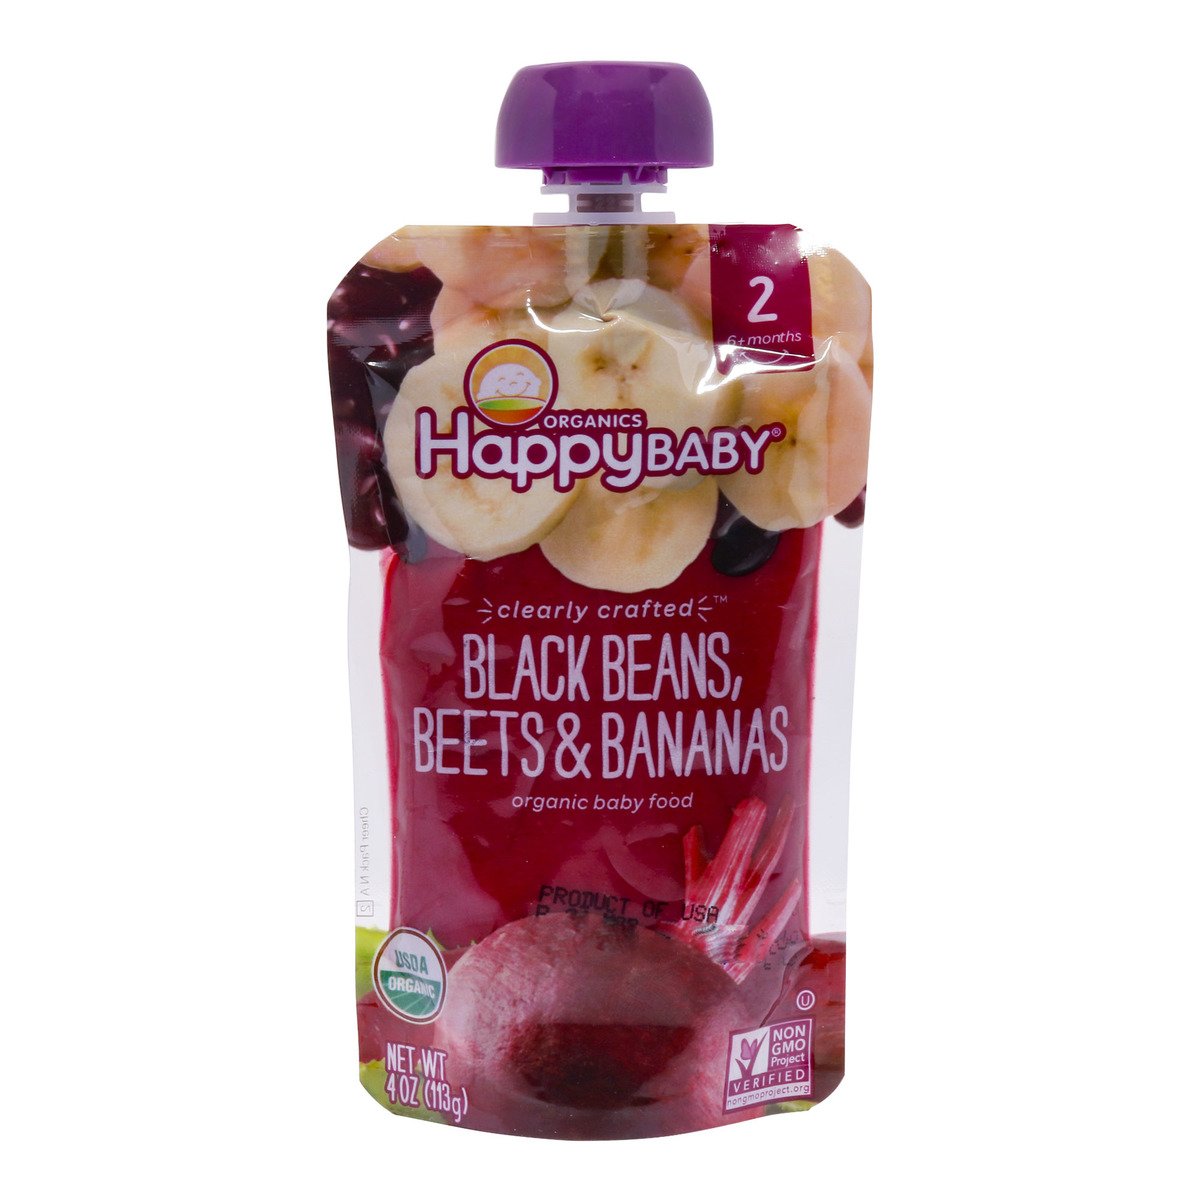 Happy Baby Organic Baby Food Black Bean, Beets & Bananas 113g